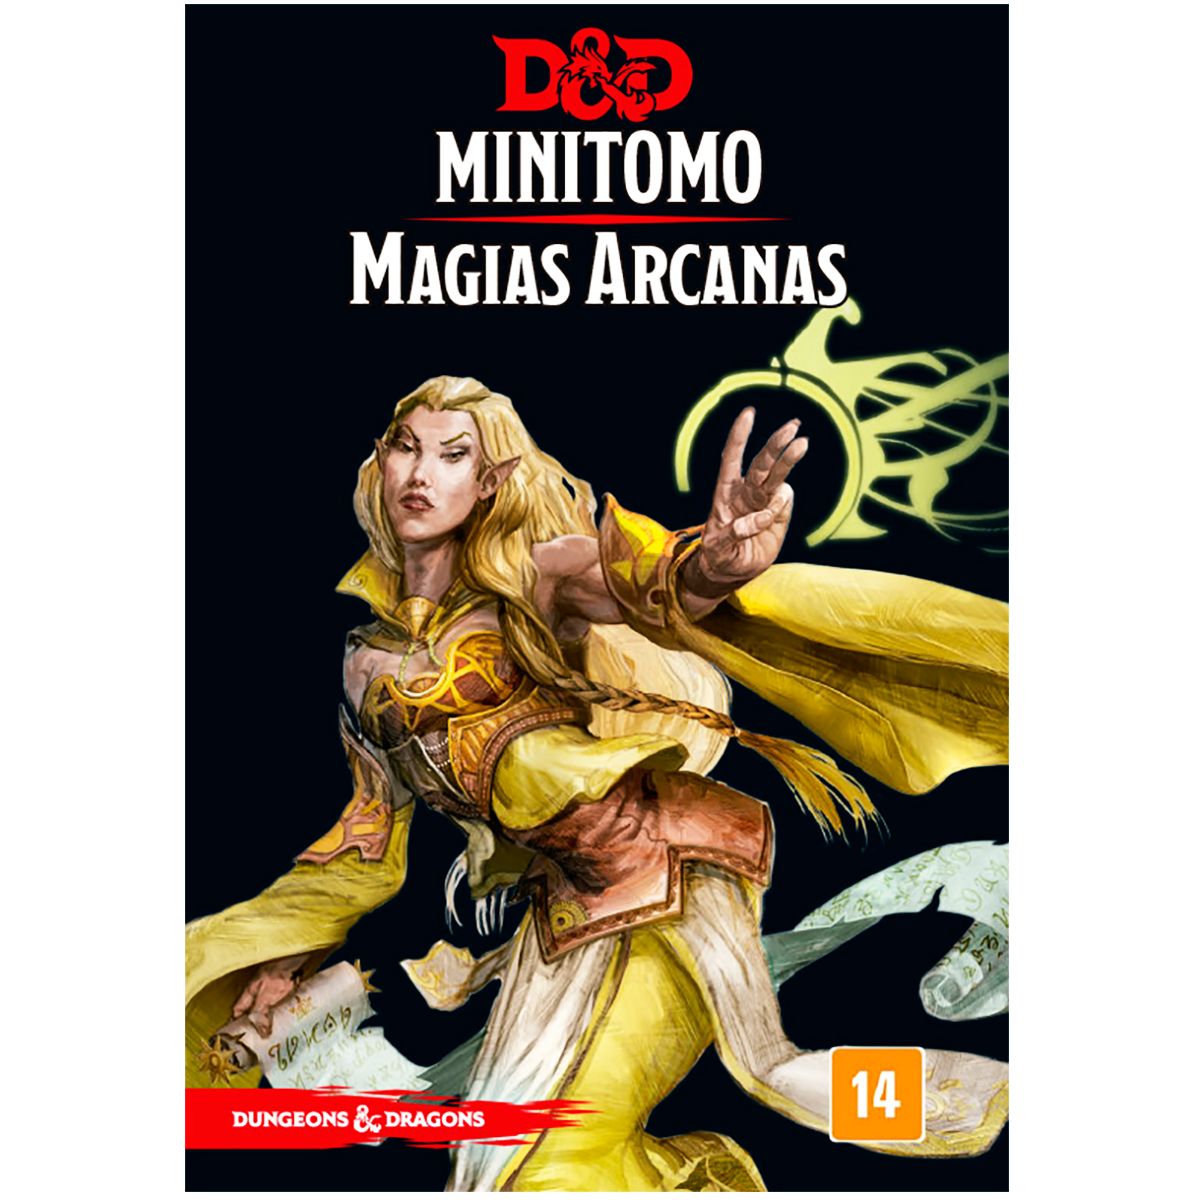 Dungeons and Dragons Minitomo Magias Arcanas Deck RPG